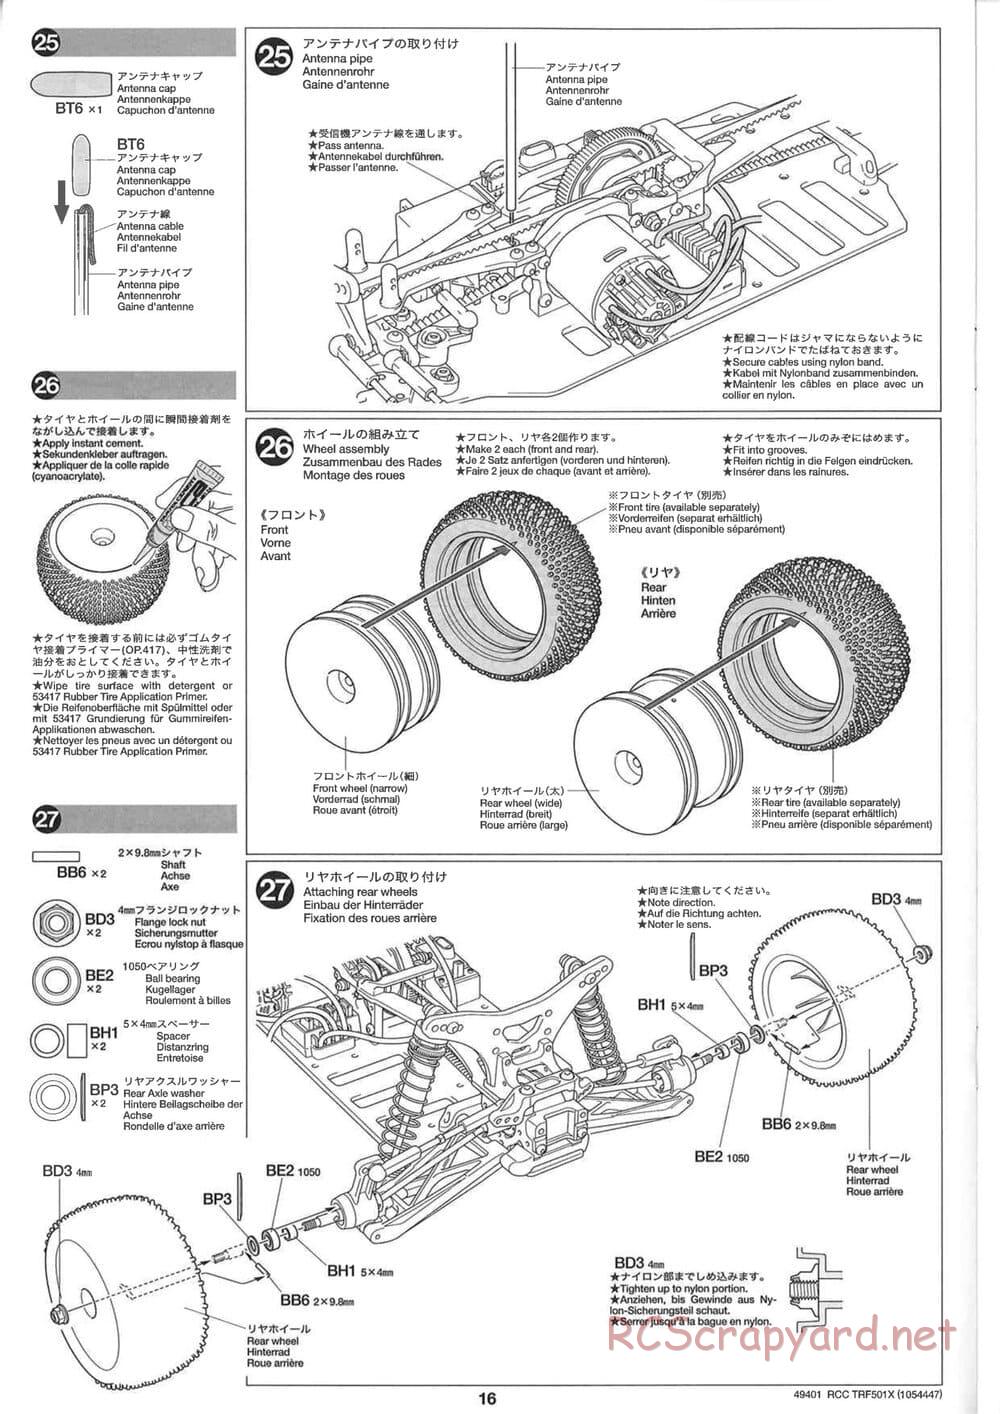 Tamiya - TRF501X Chassis - Manual - Page 16